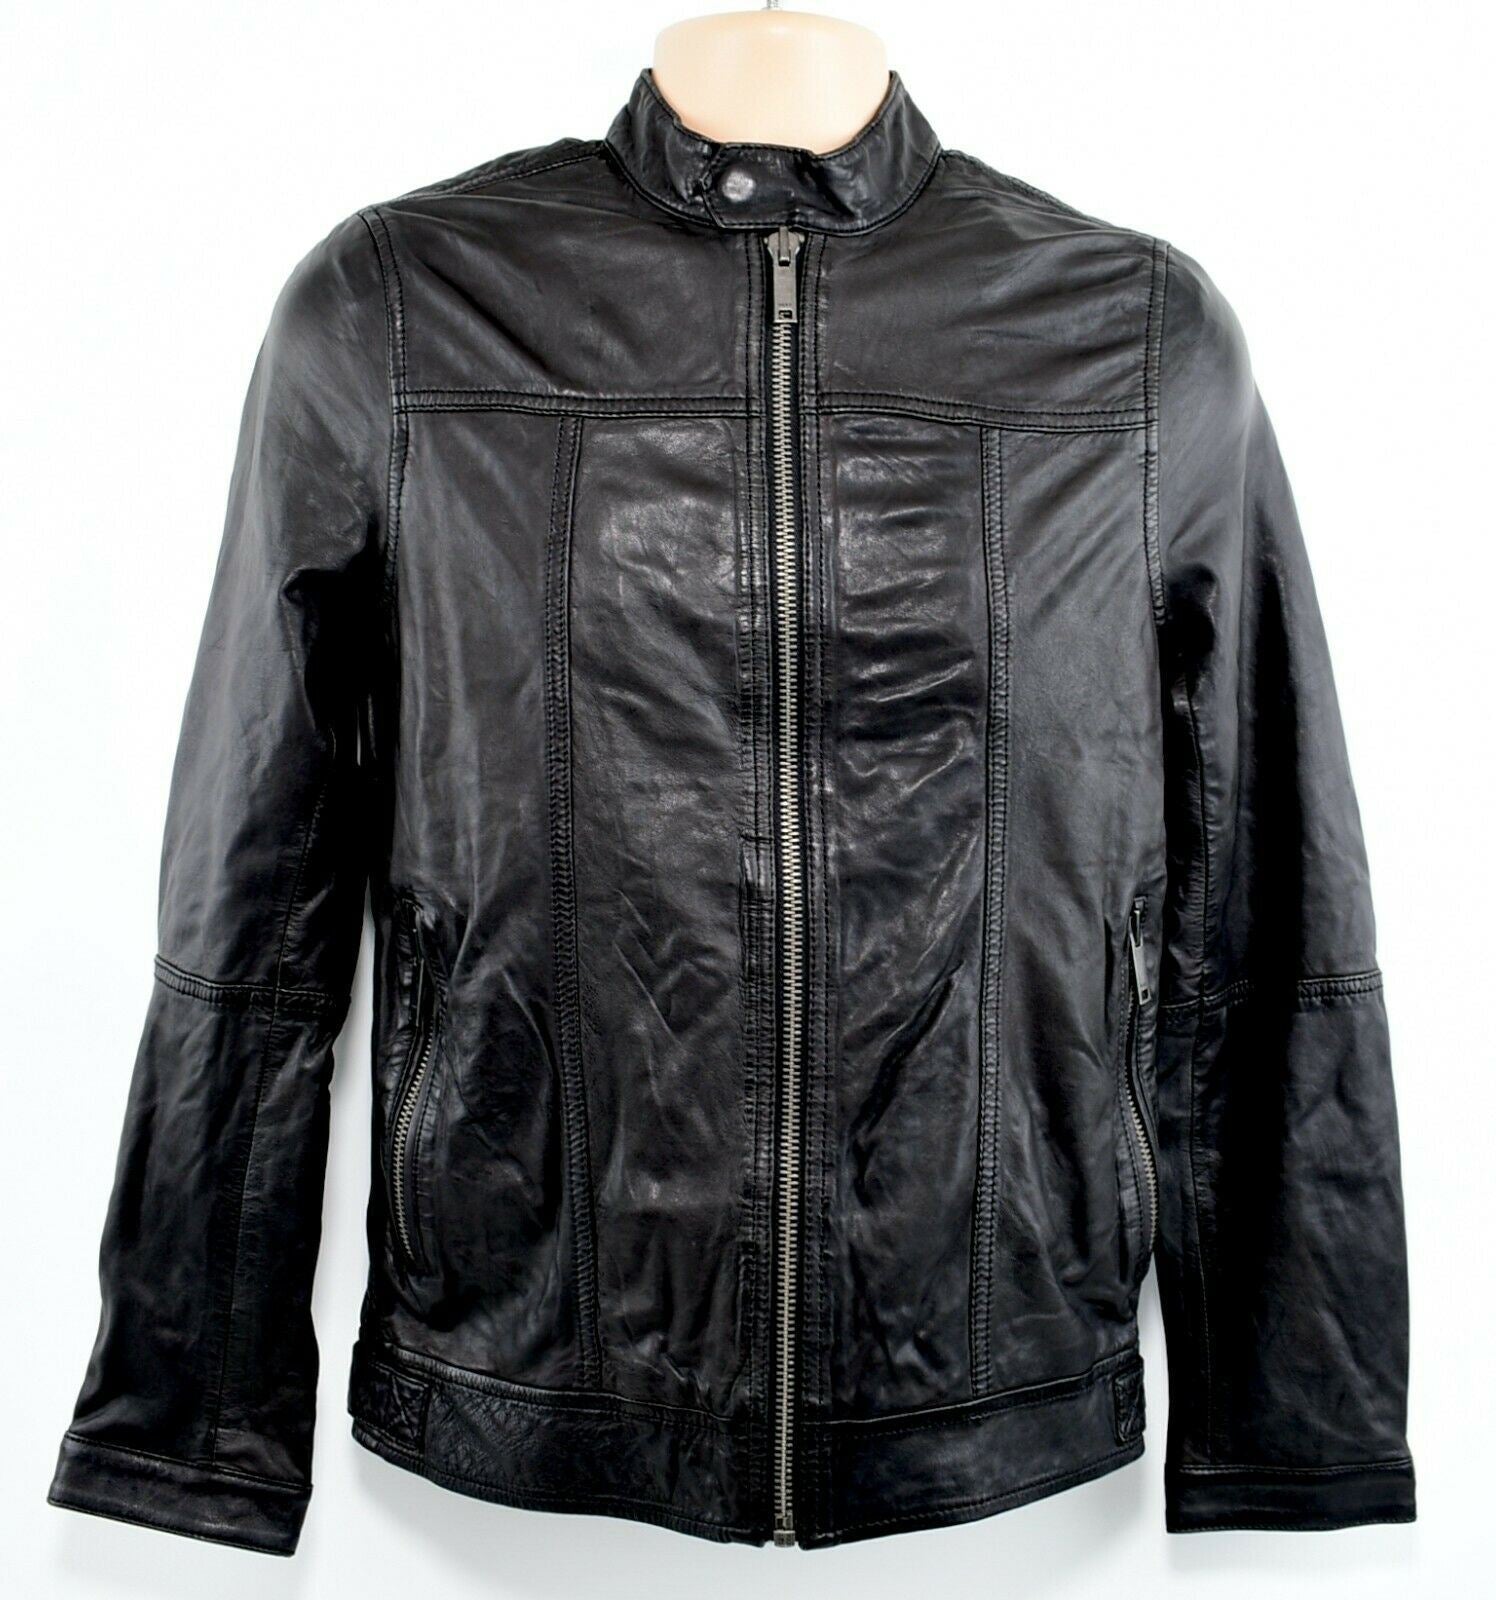 DKNY Men's Black Genuine Leather Jacket, size XS